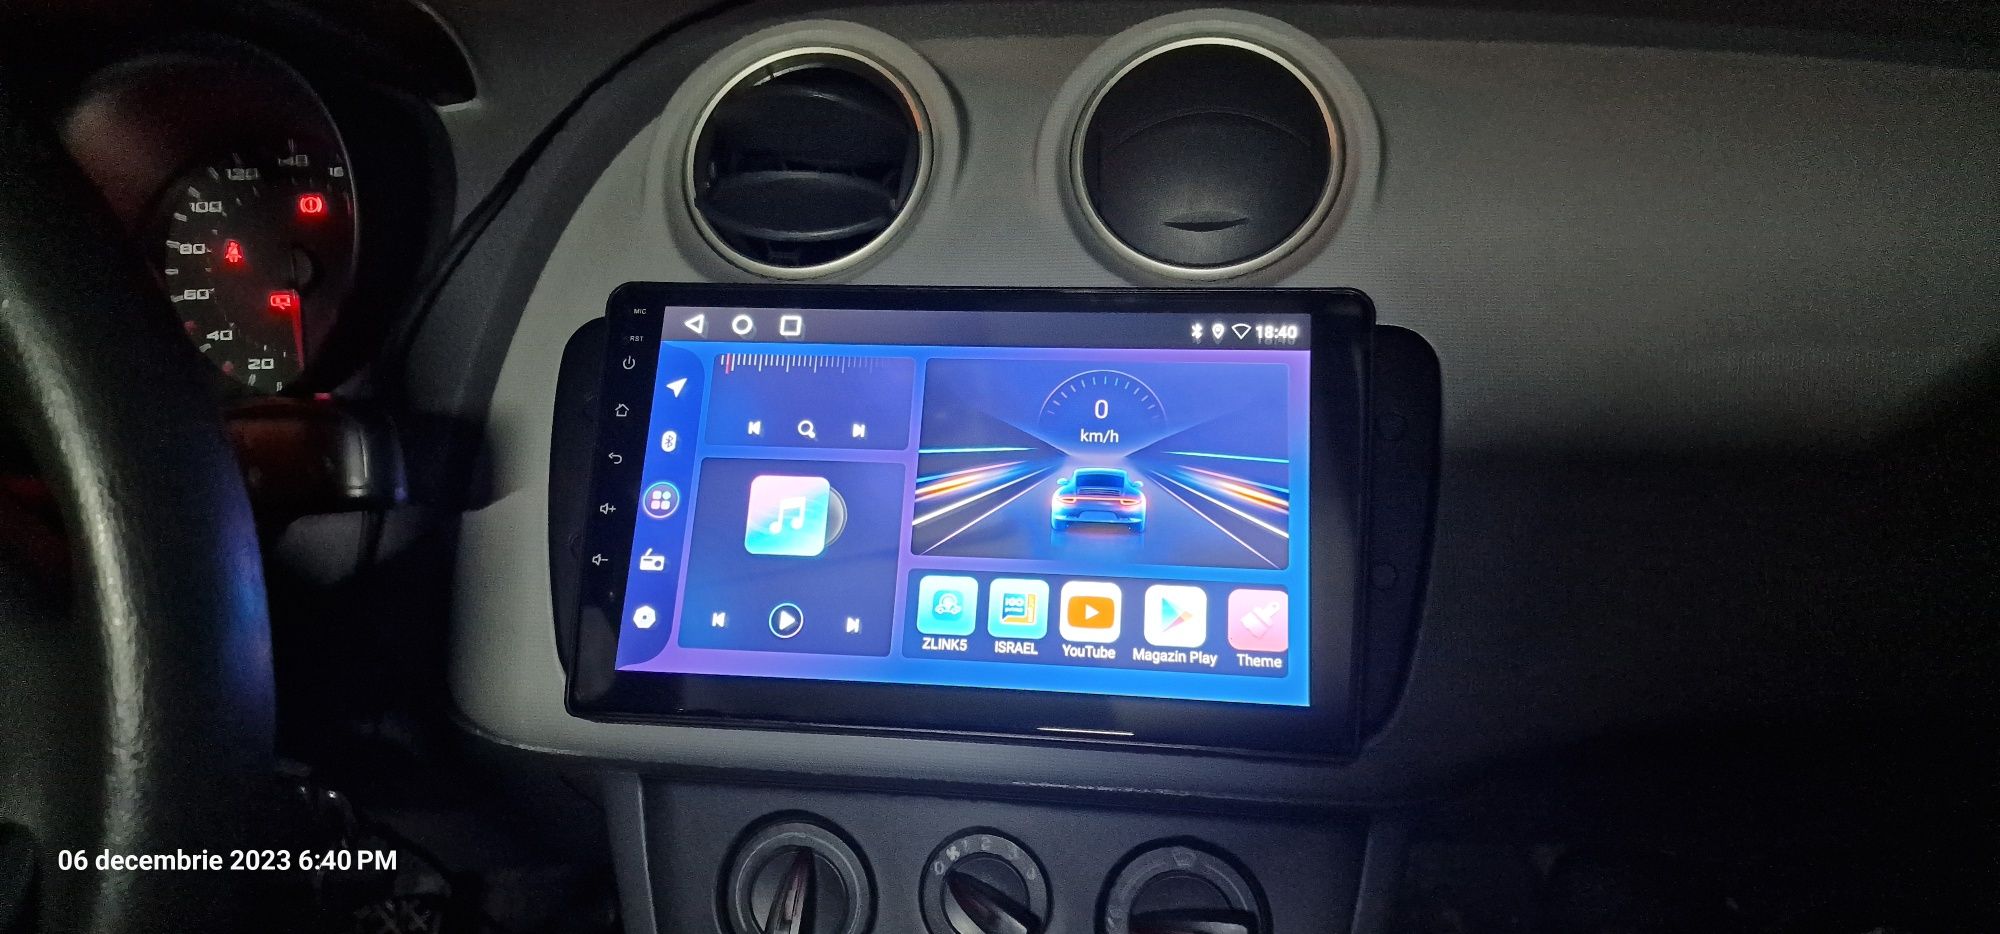 Navigatii android si sisteme audio auto